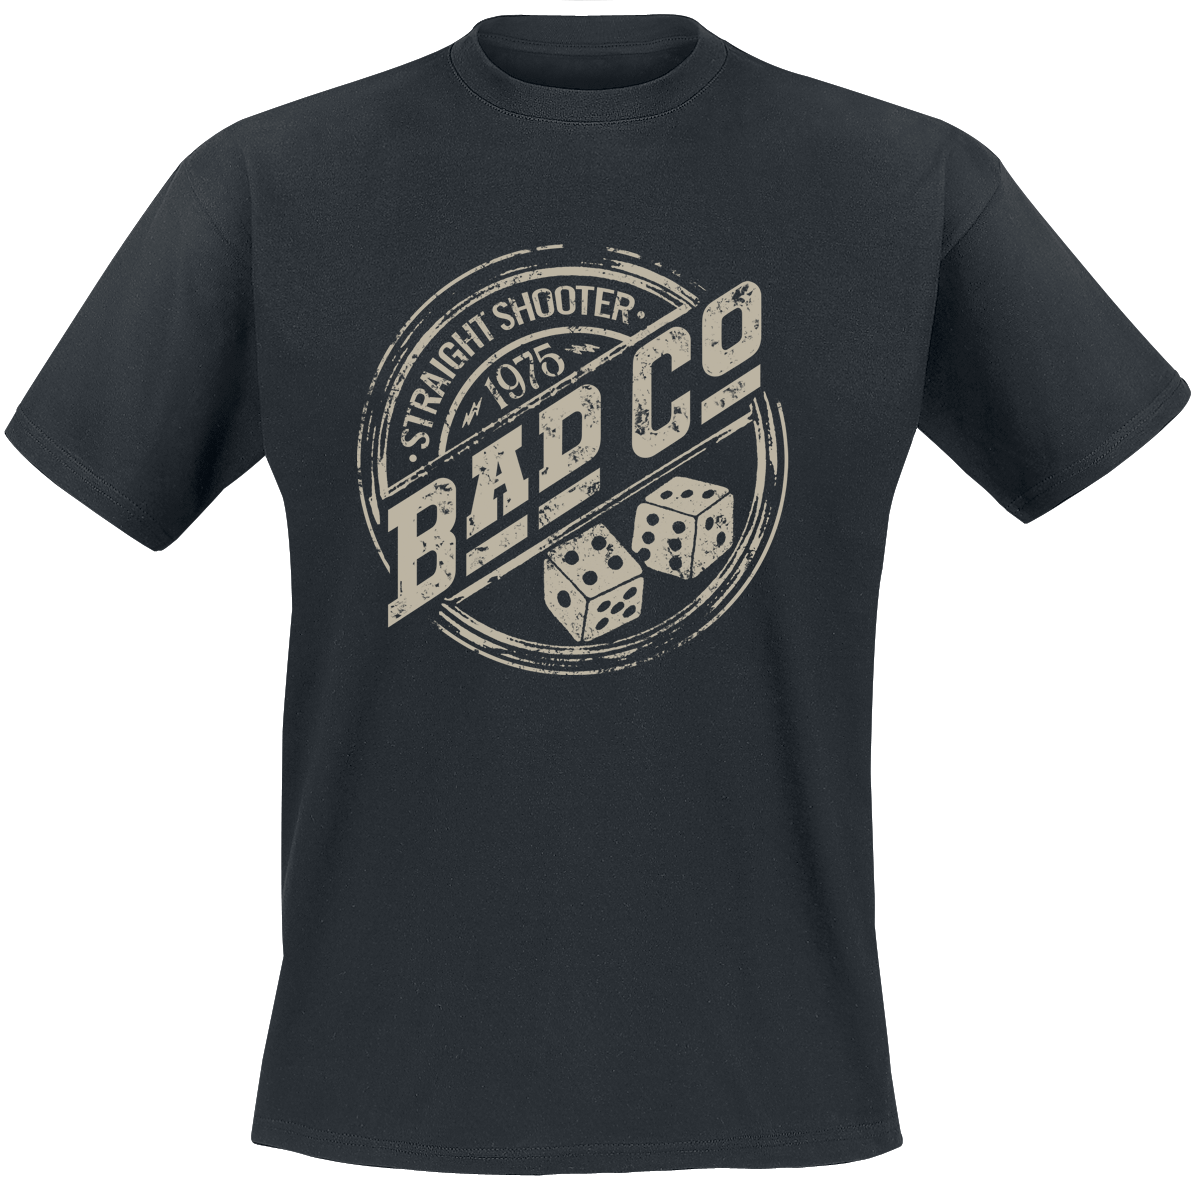 Bad Company - Straight Shooter - T-Shirt - schwarz - EMP Exklusiv!